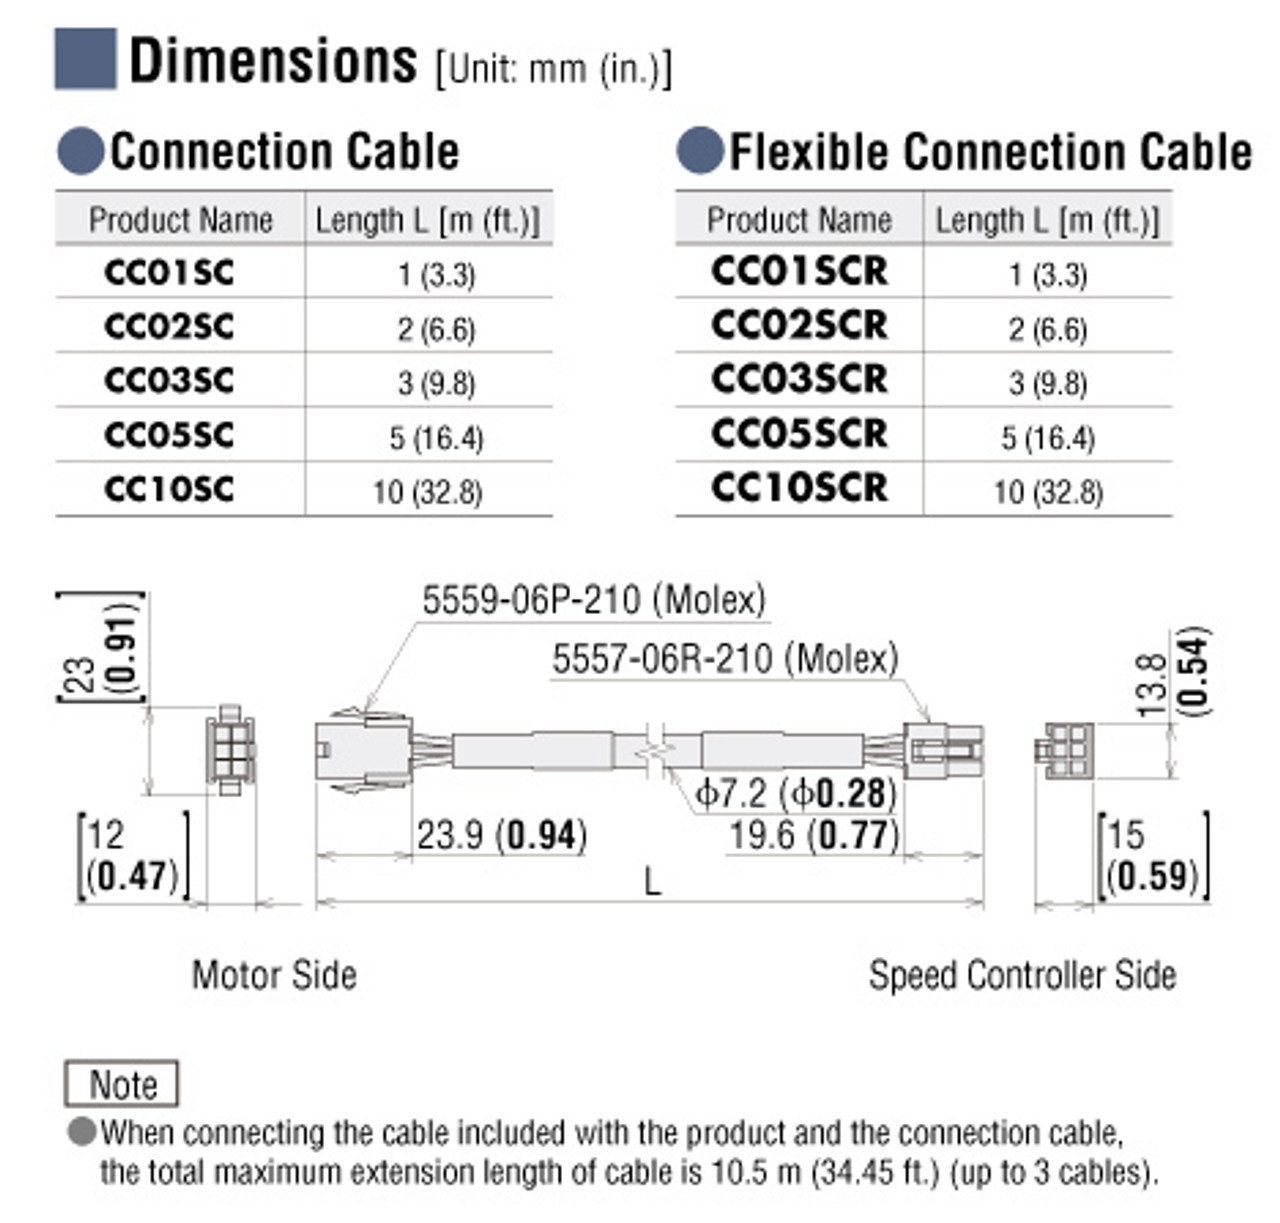 CC10SCR - Dimensions